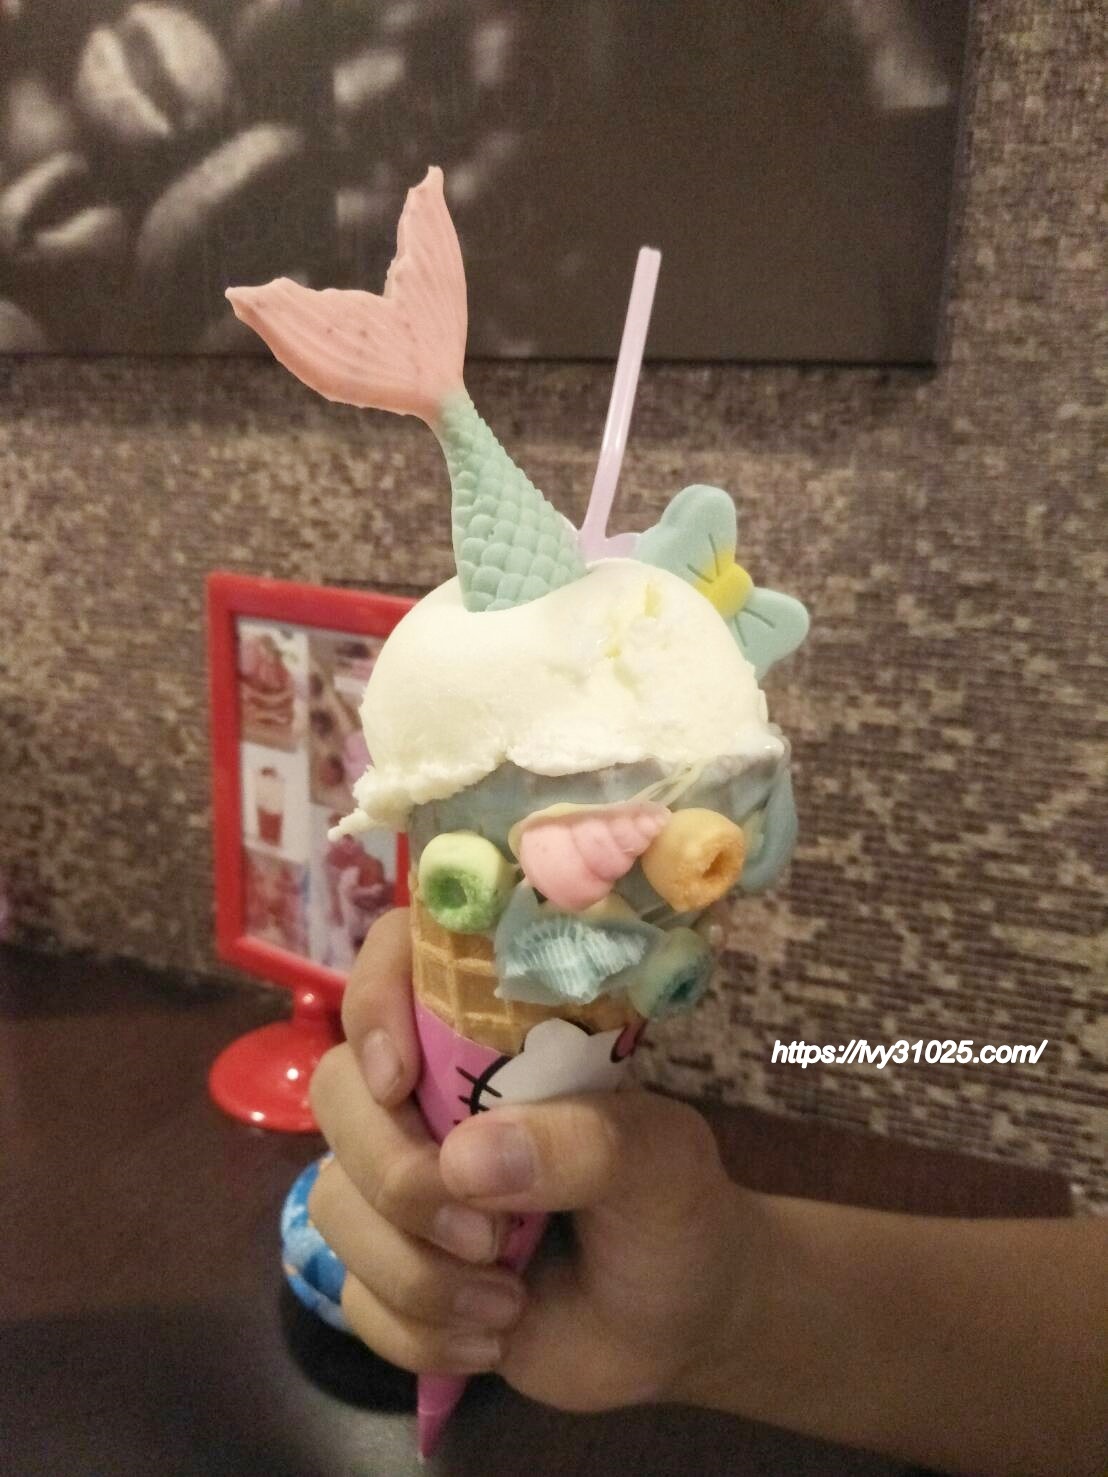 buono pops | 繽紛童趣甜筒冰淇淋 | 美人魚 | 熊寶寶 | 高雄鹽埕美食